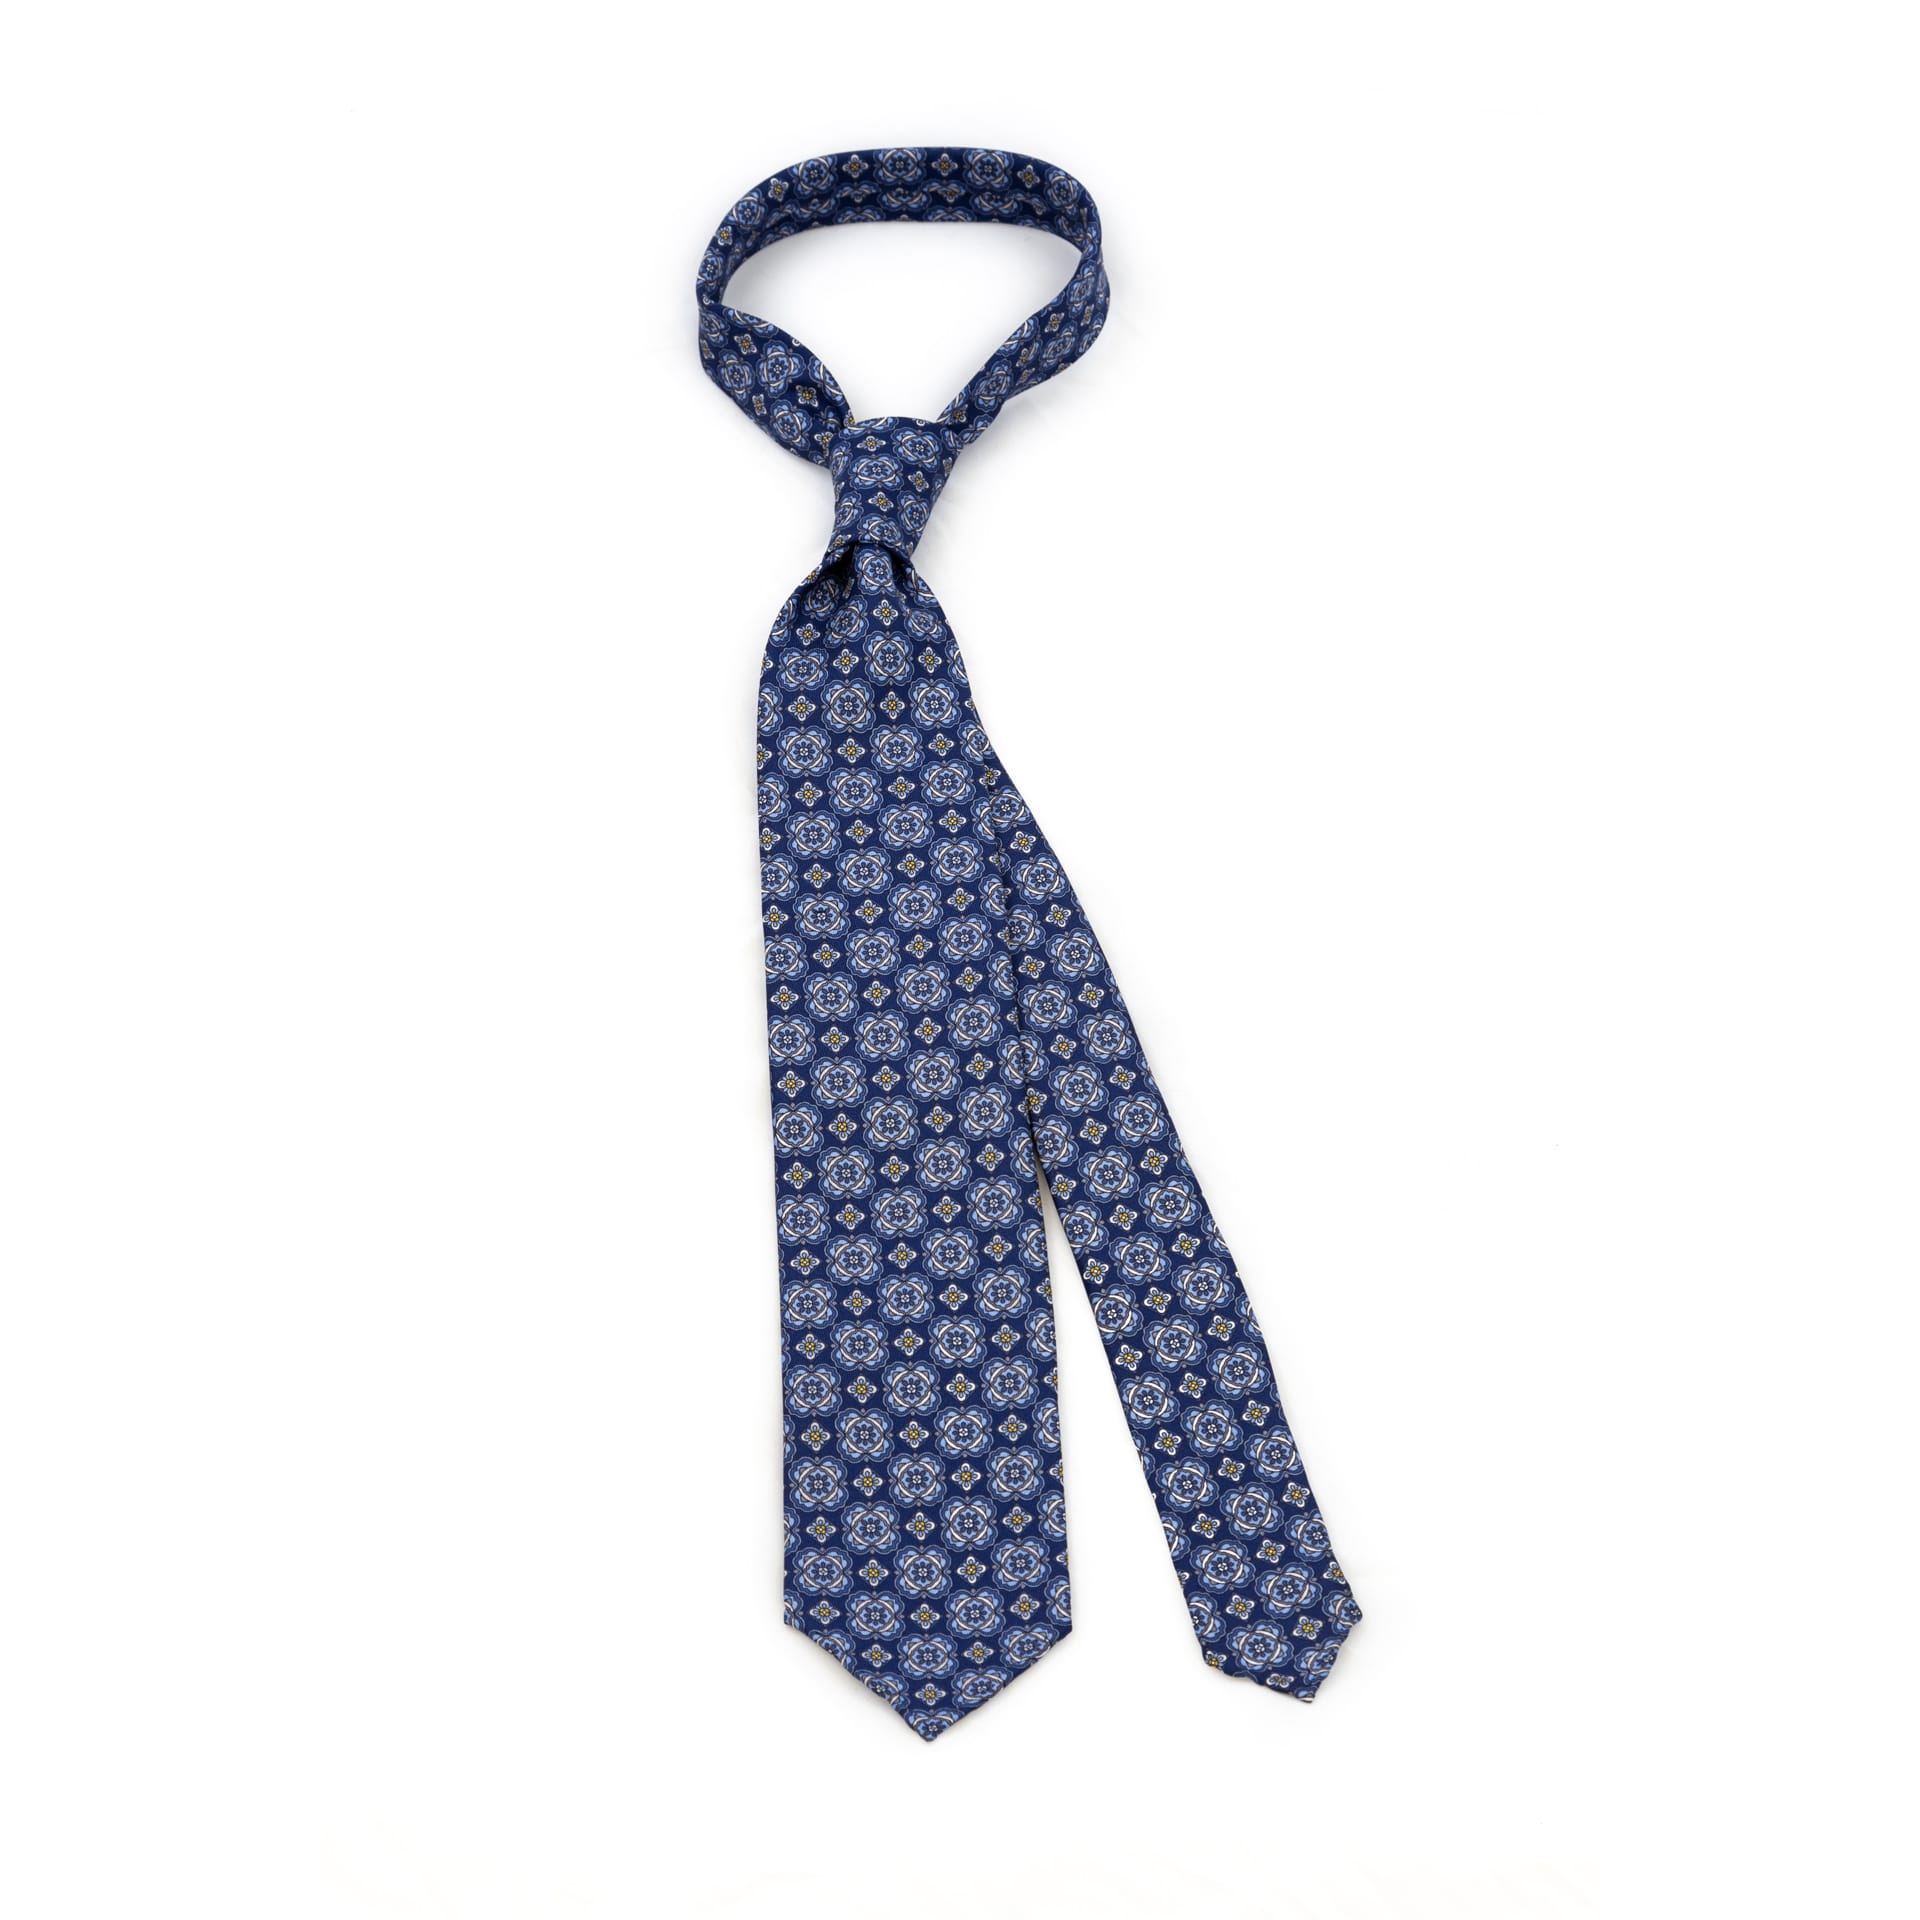 Blue 5-fold printed silk tie